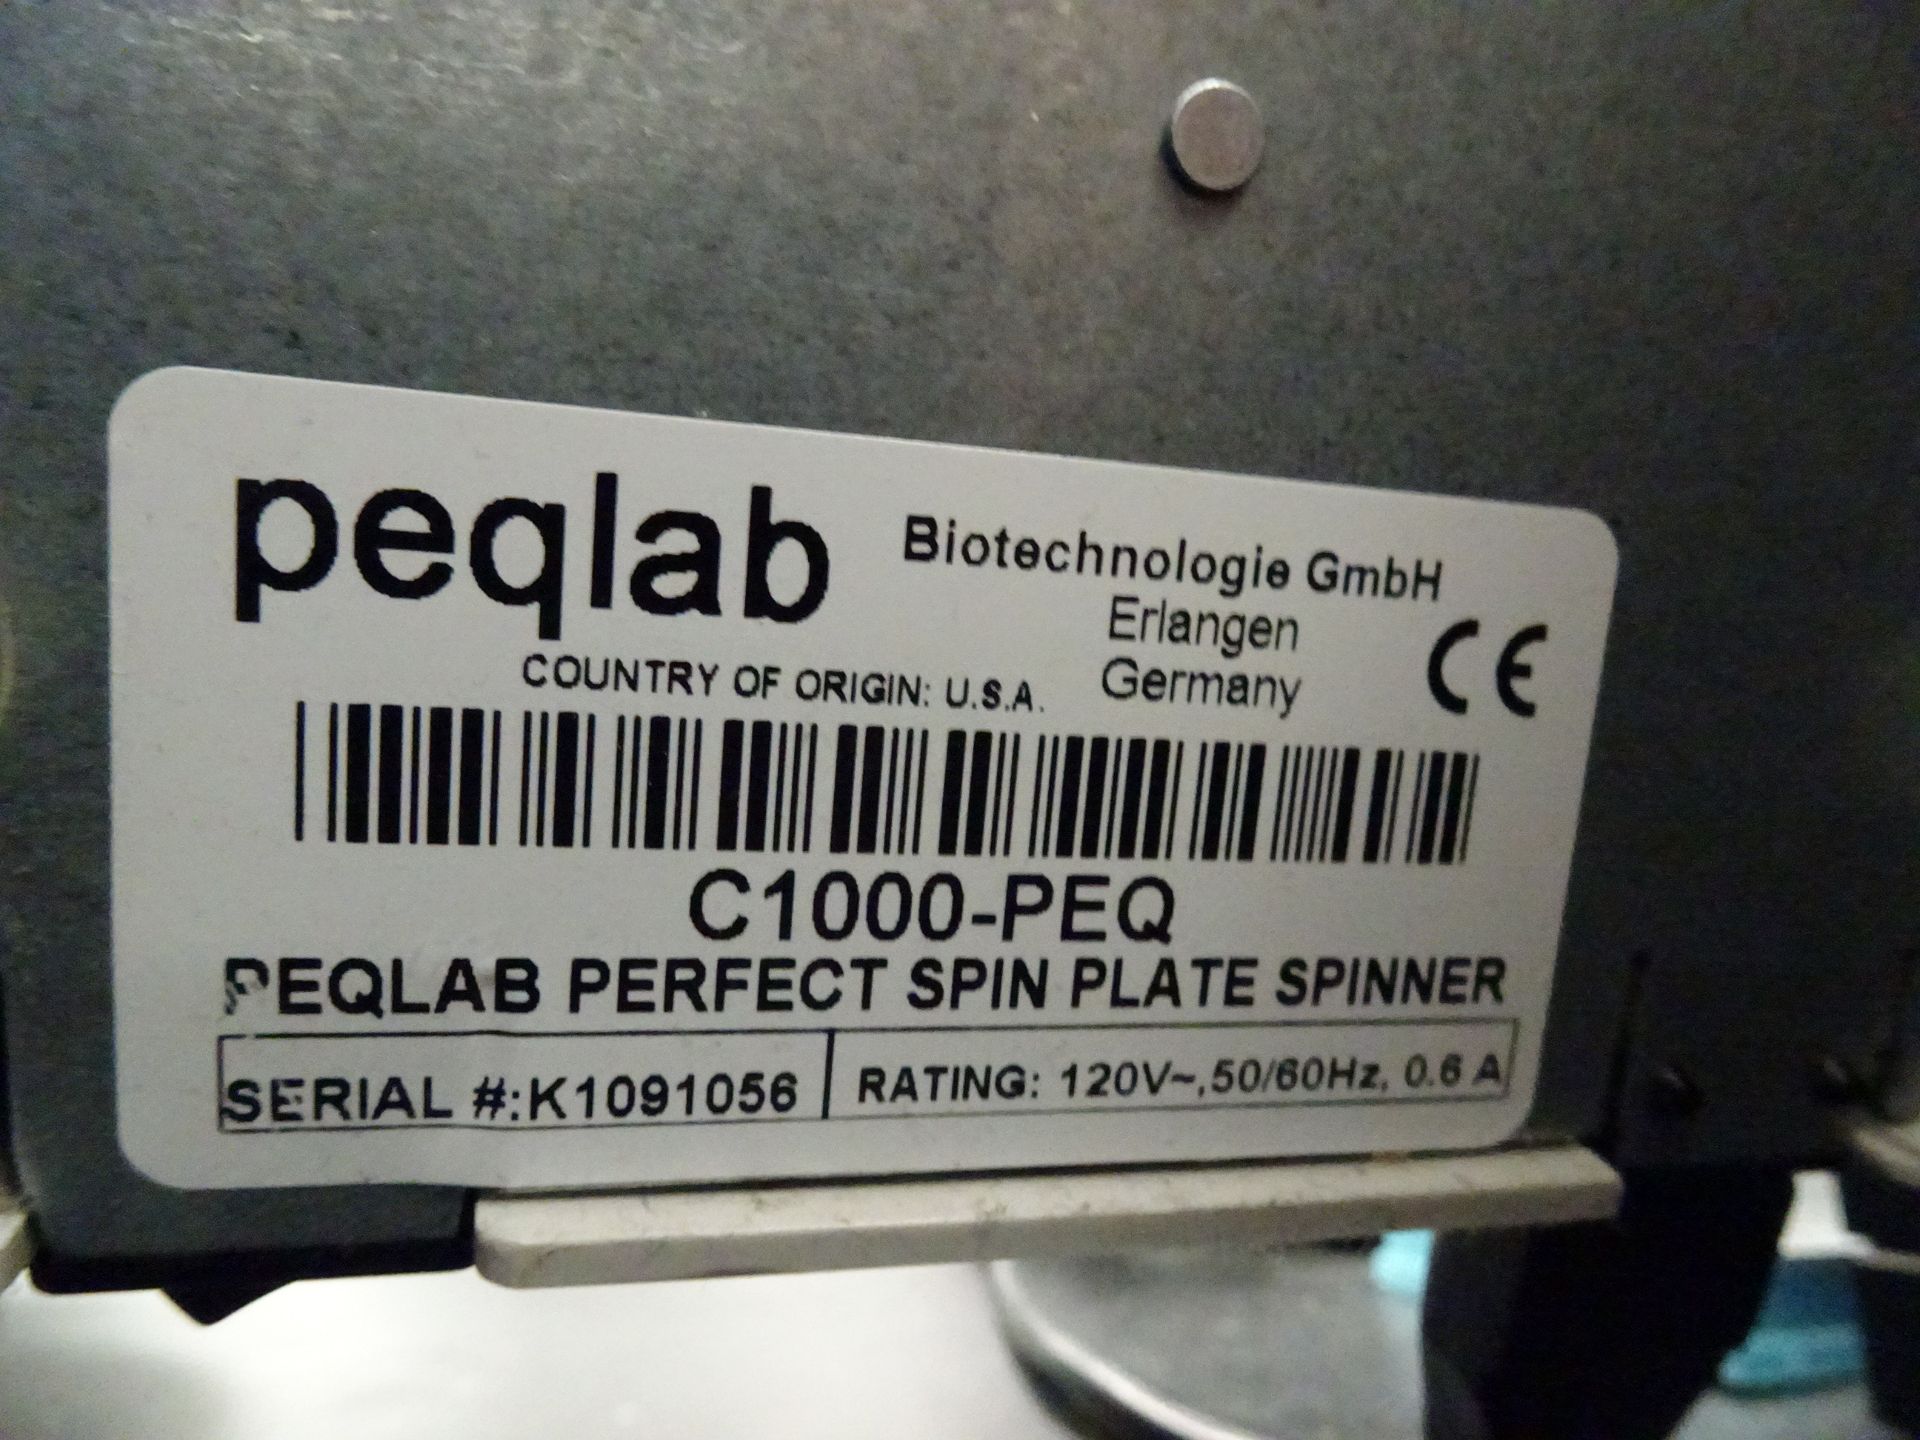 Peqlab Perfect Spin Plate Spinner Model C1000-PEQ 120v, 50/60Hz sn K1091056 (Asset I.D. # ) - Image 4 of 5